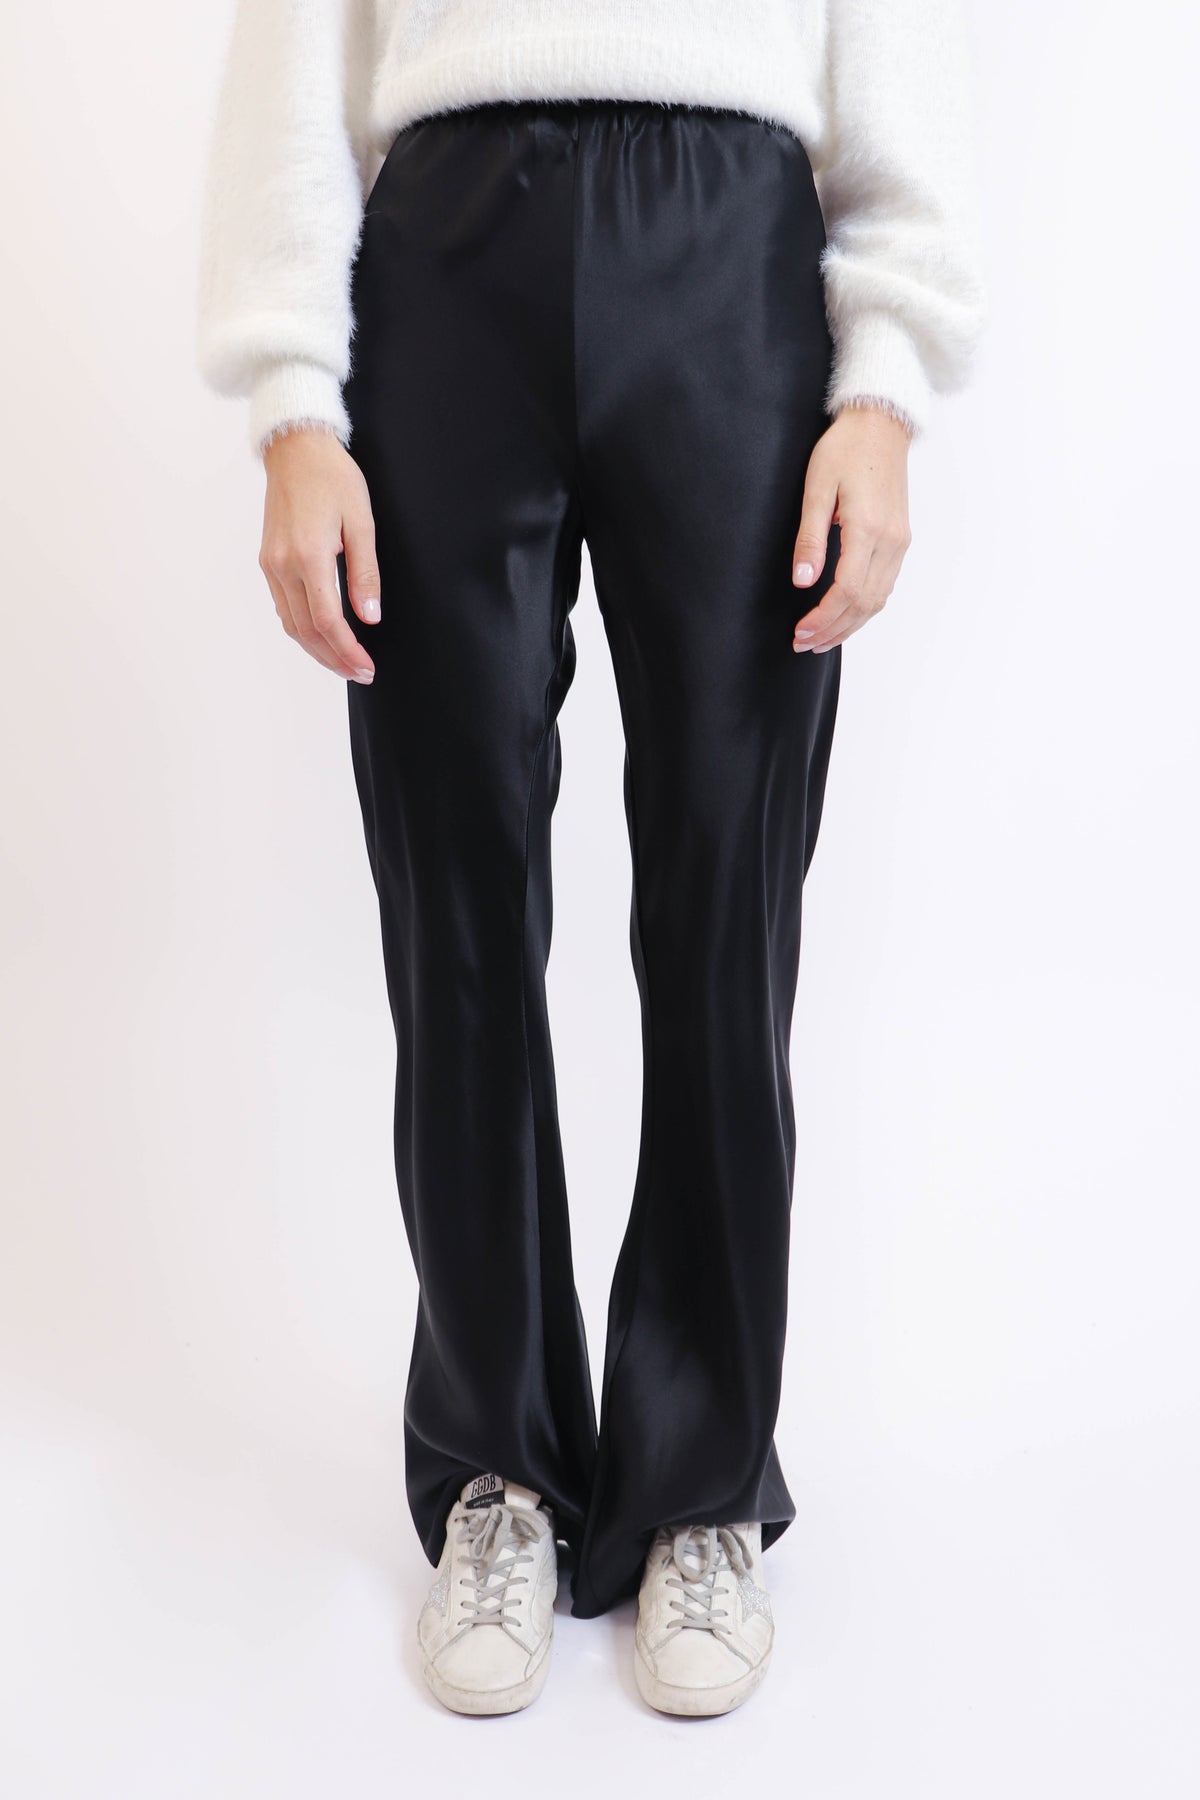 Black Silk Pants High-waisted Silk Pants 100% Silk Pant Long